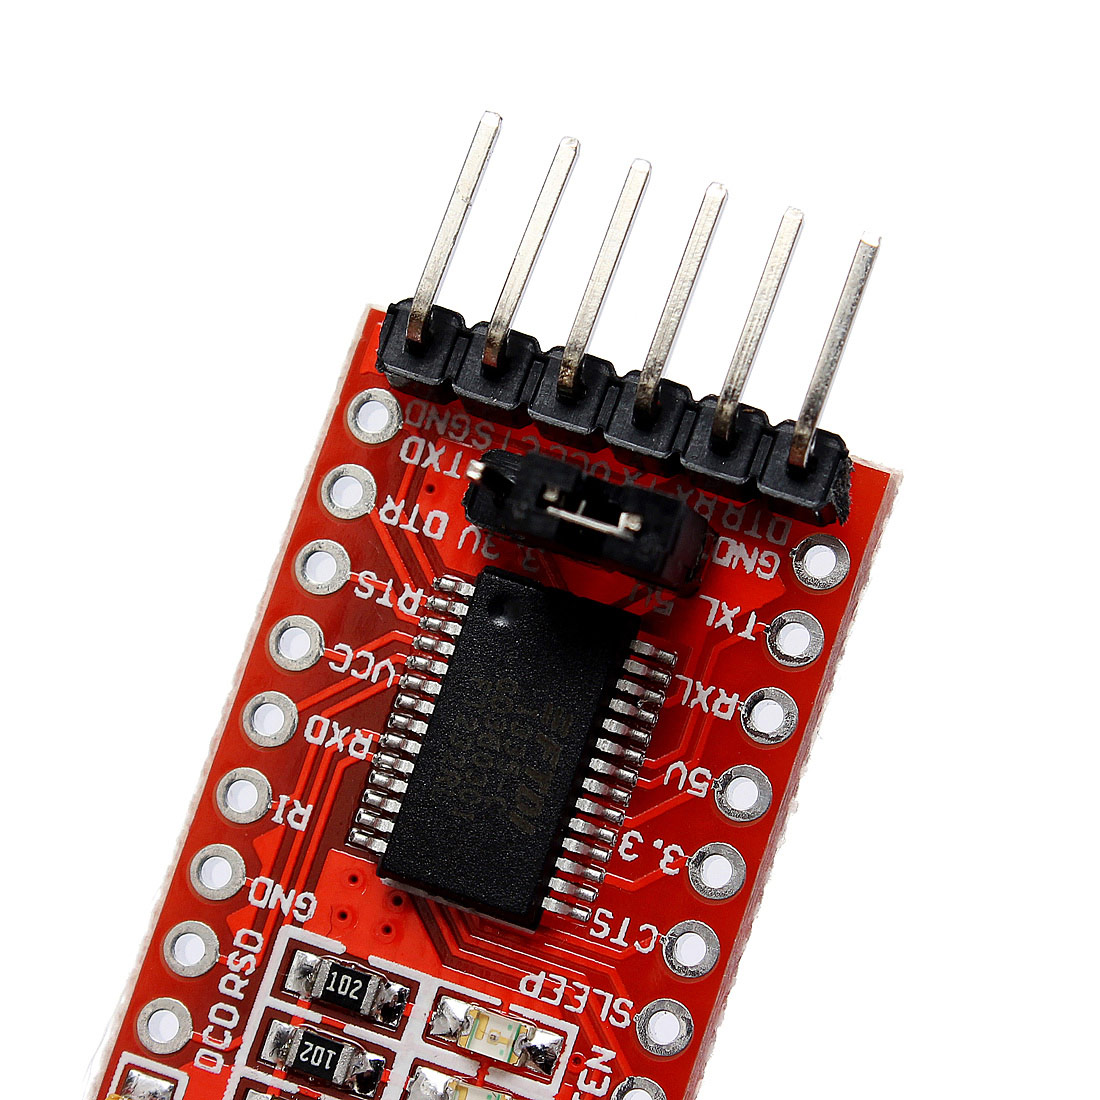 Geekcreitreg-FT232RL-FTDI-USB-To-TTL-Serial-Converter-Adapter-Module-Geekcreit-for-Arduino---product-917226-5